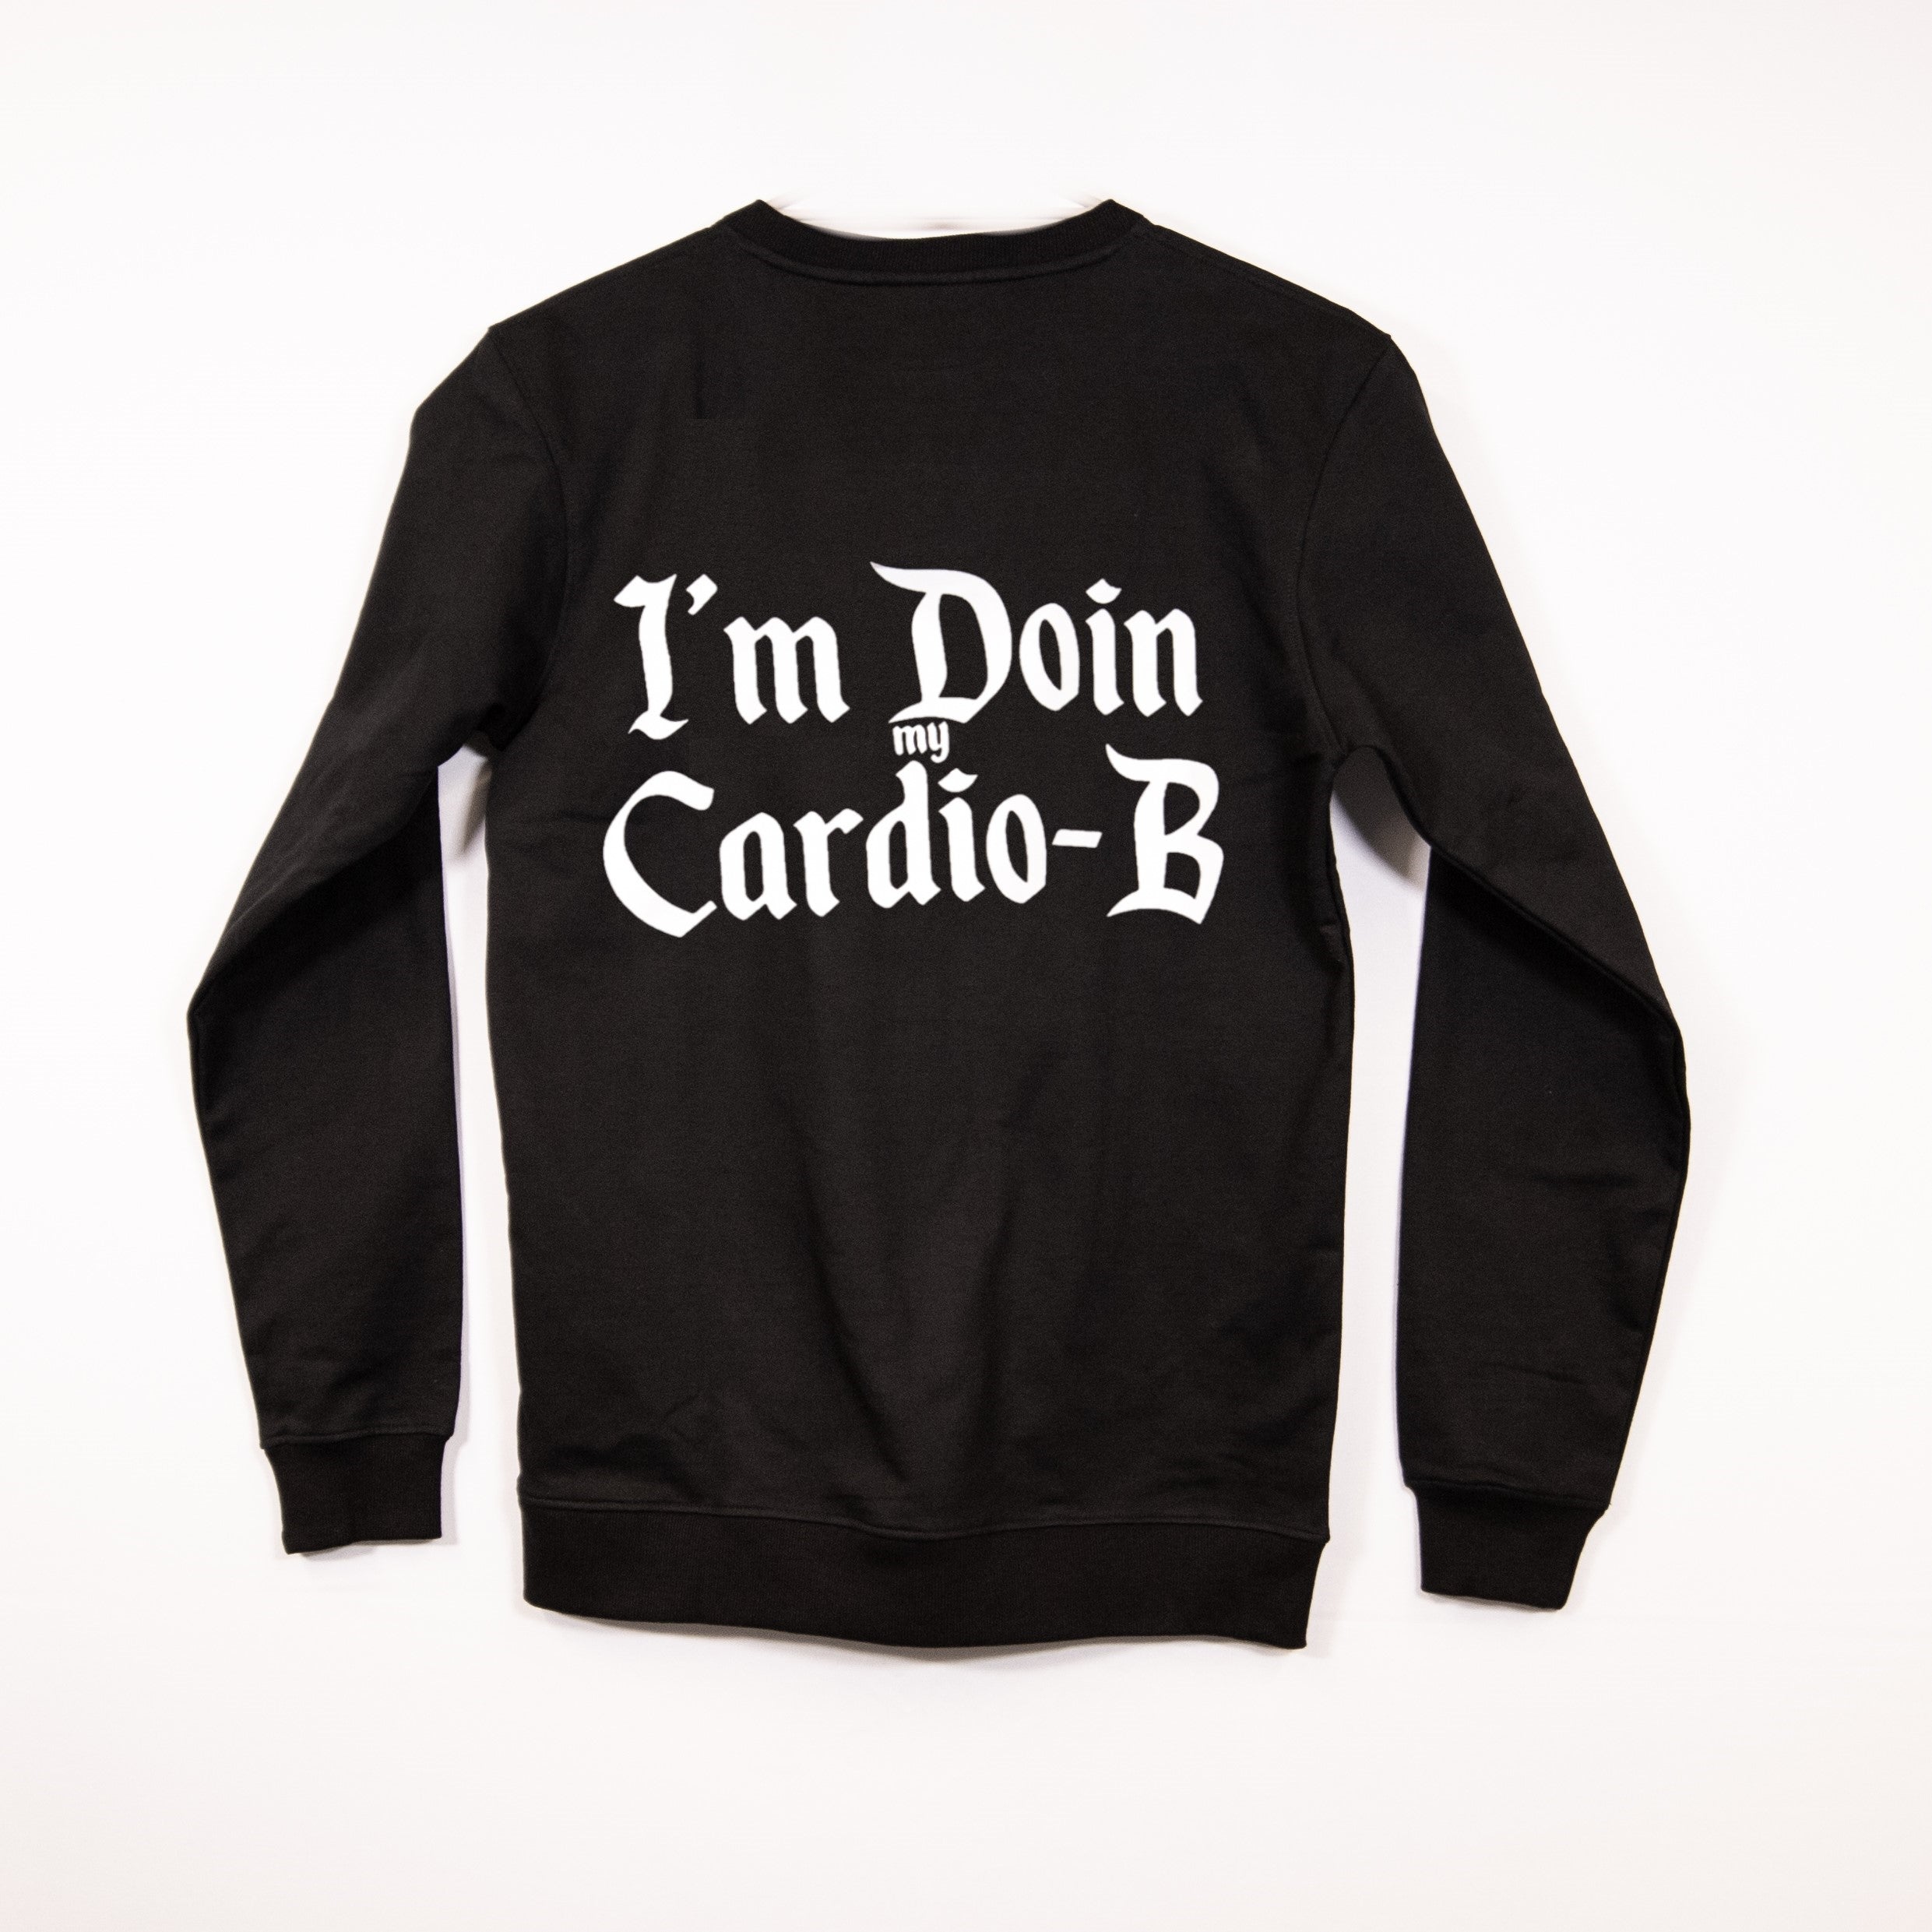 I’m Doin my Cardio B Sweatshirt